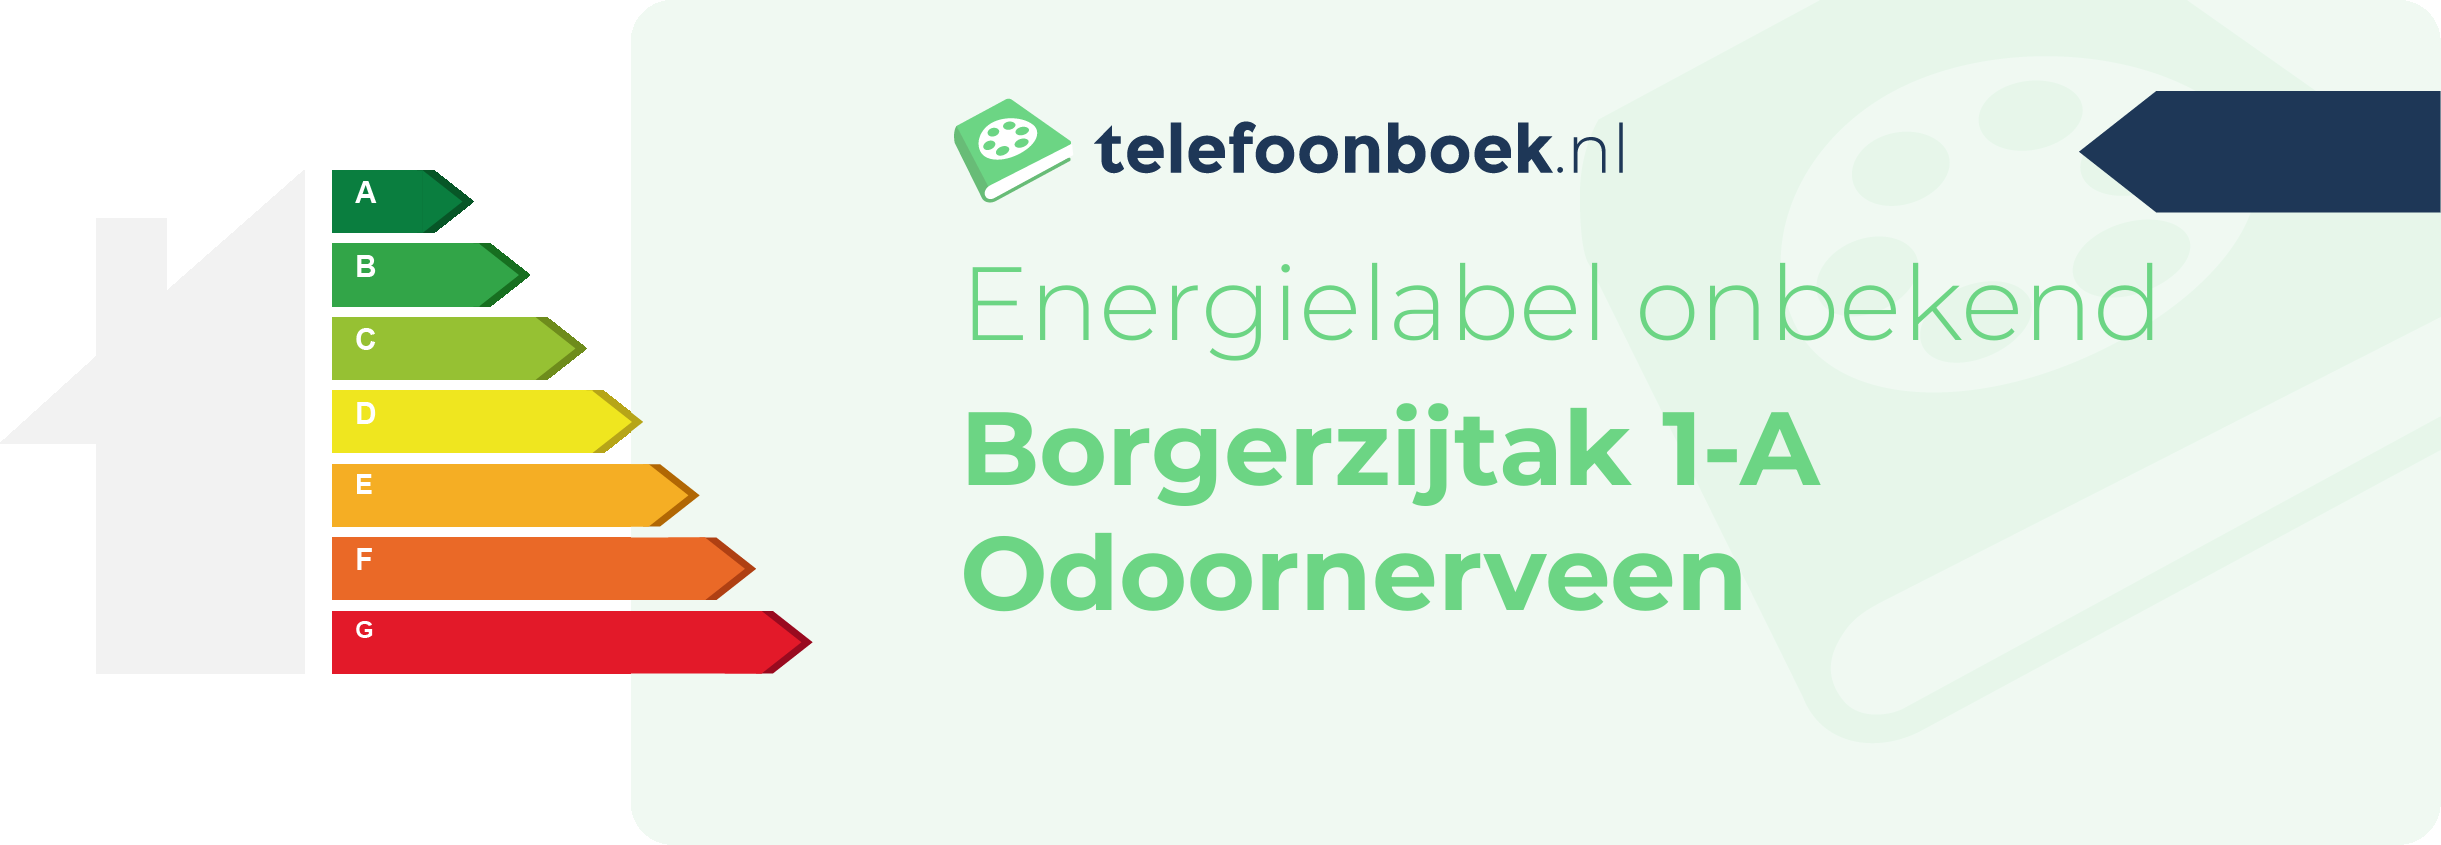 Energielabel Borgerzijtak 1-A Odoornerveen